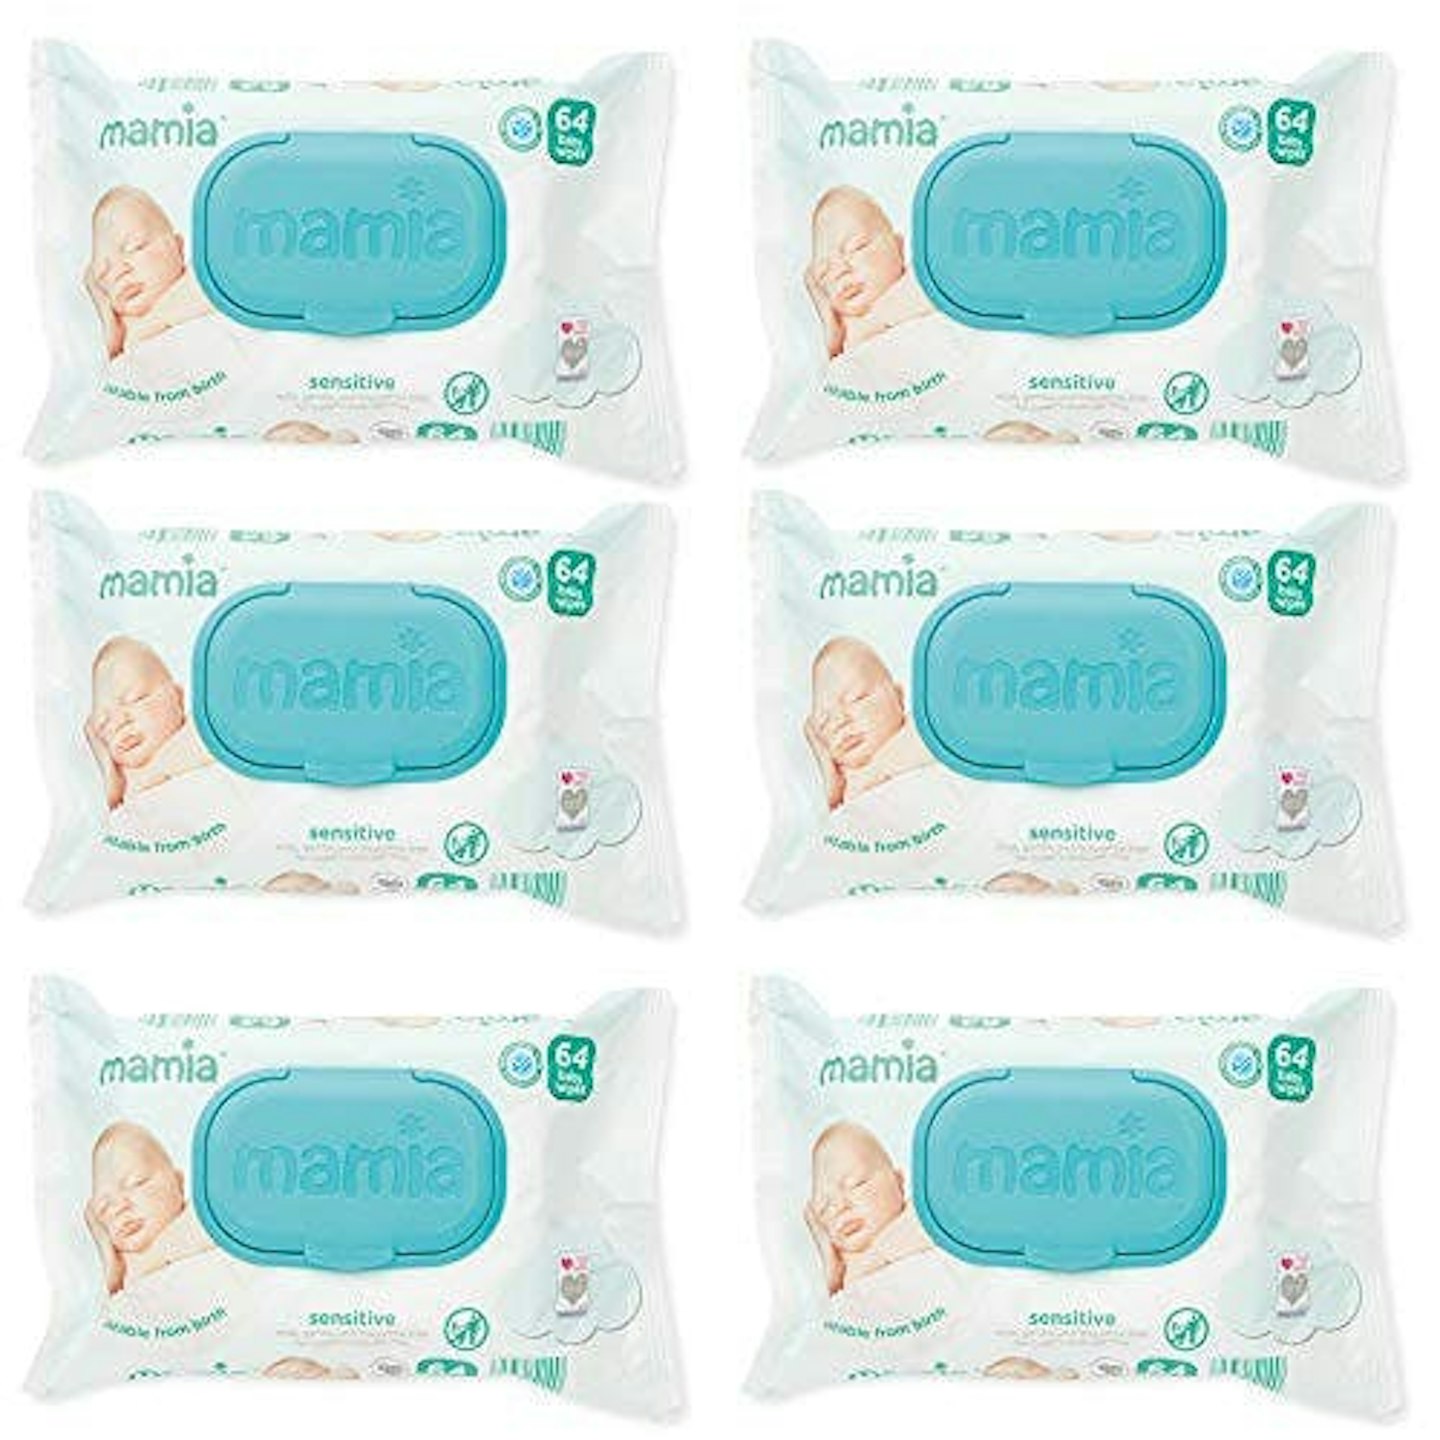 Aldi Mamia Sensitive Baby Wipes 6x64 Packs